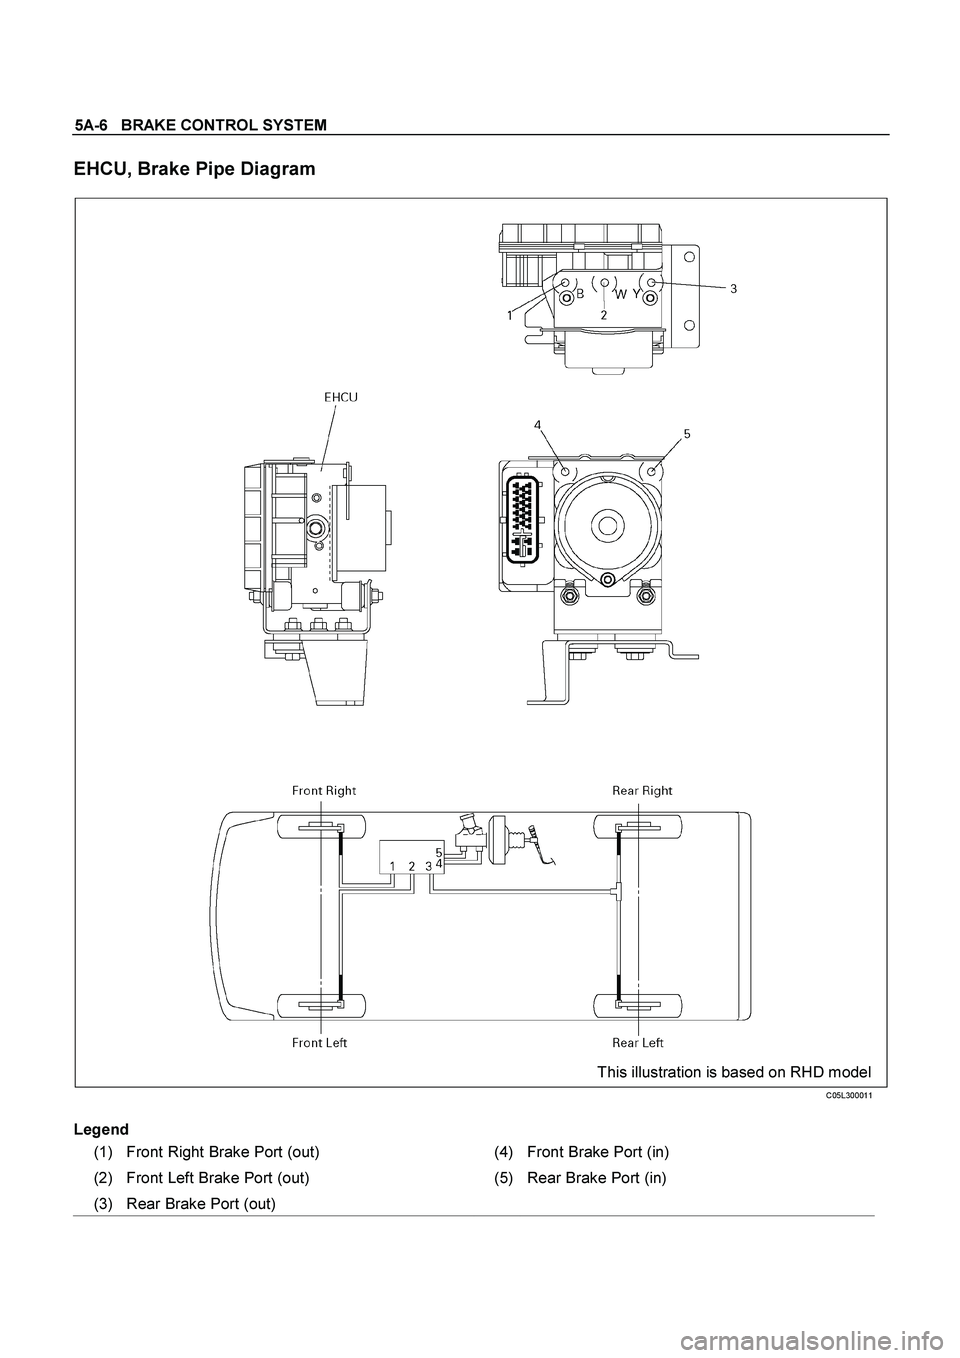 ISUZU TF SERIES 2004  Workshop Manual 5A-6   BRAKE CONTROL SYSTEM
 
EHCU, Brake Pipe Diagram 
 
 
 
 
 
 
 
 
This illustration is based on RHD model 
 
C05L300011 
 
Legend
 
(1)  Front Right Brake Port (out) 
(4) Front Brake Port (in) 
